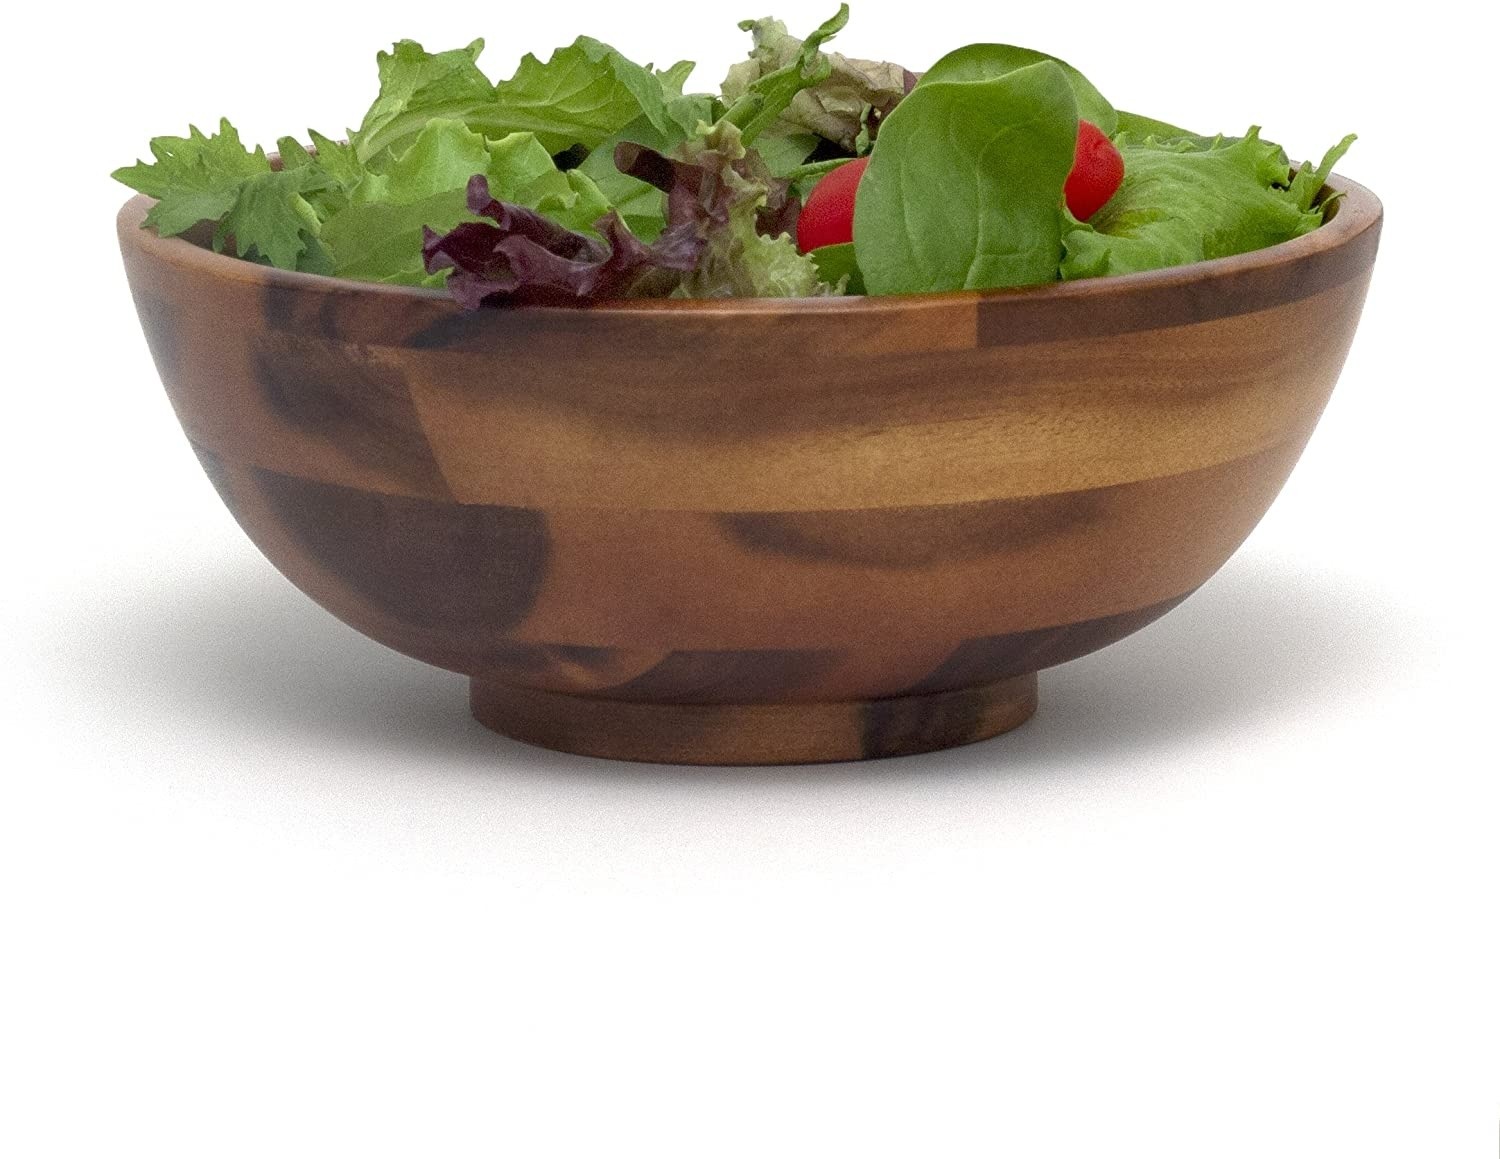 Serving Bowl for Fruits or Salads